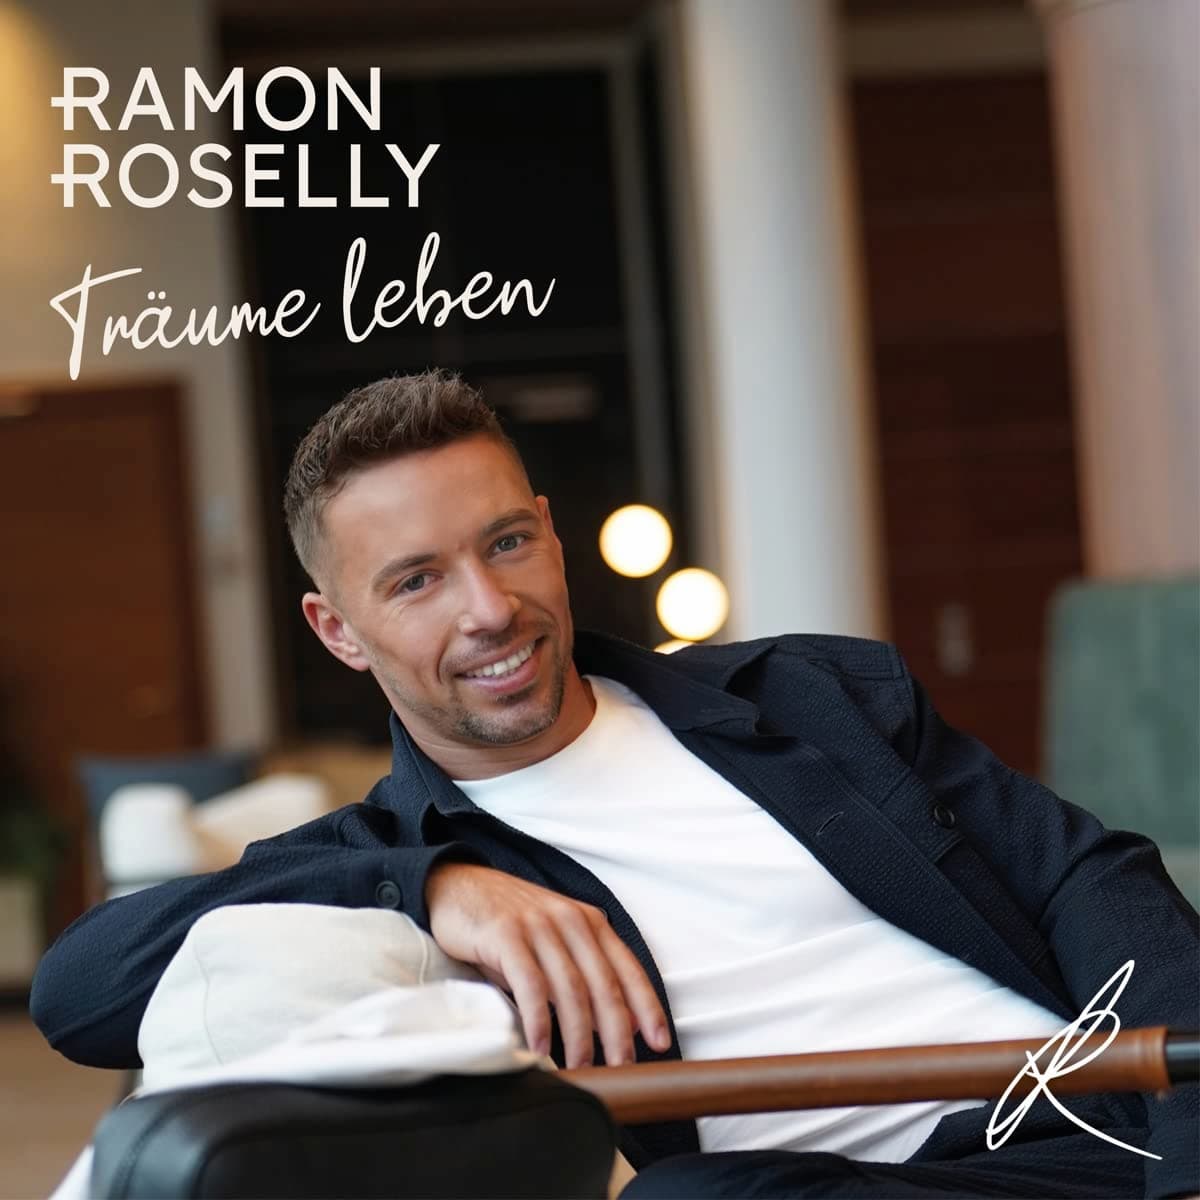 Ramon Roselly CD “Träume leben” 2022 - hier im Bild das CD-Cover